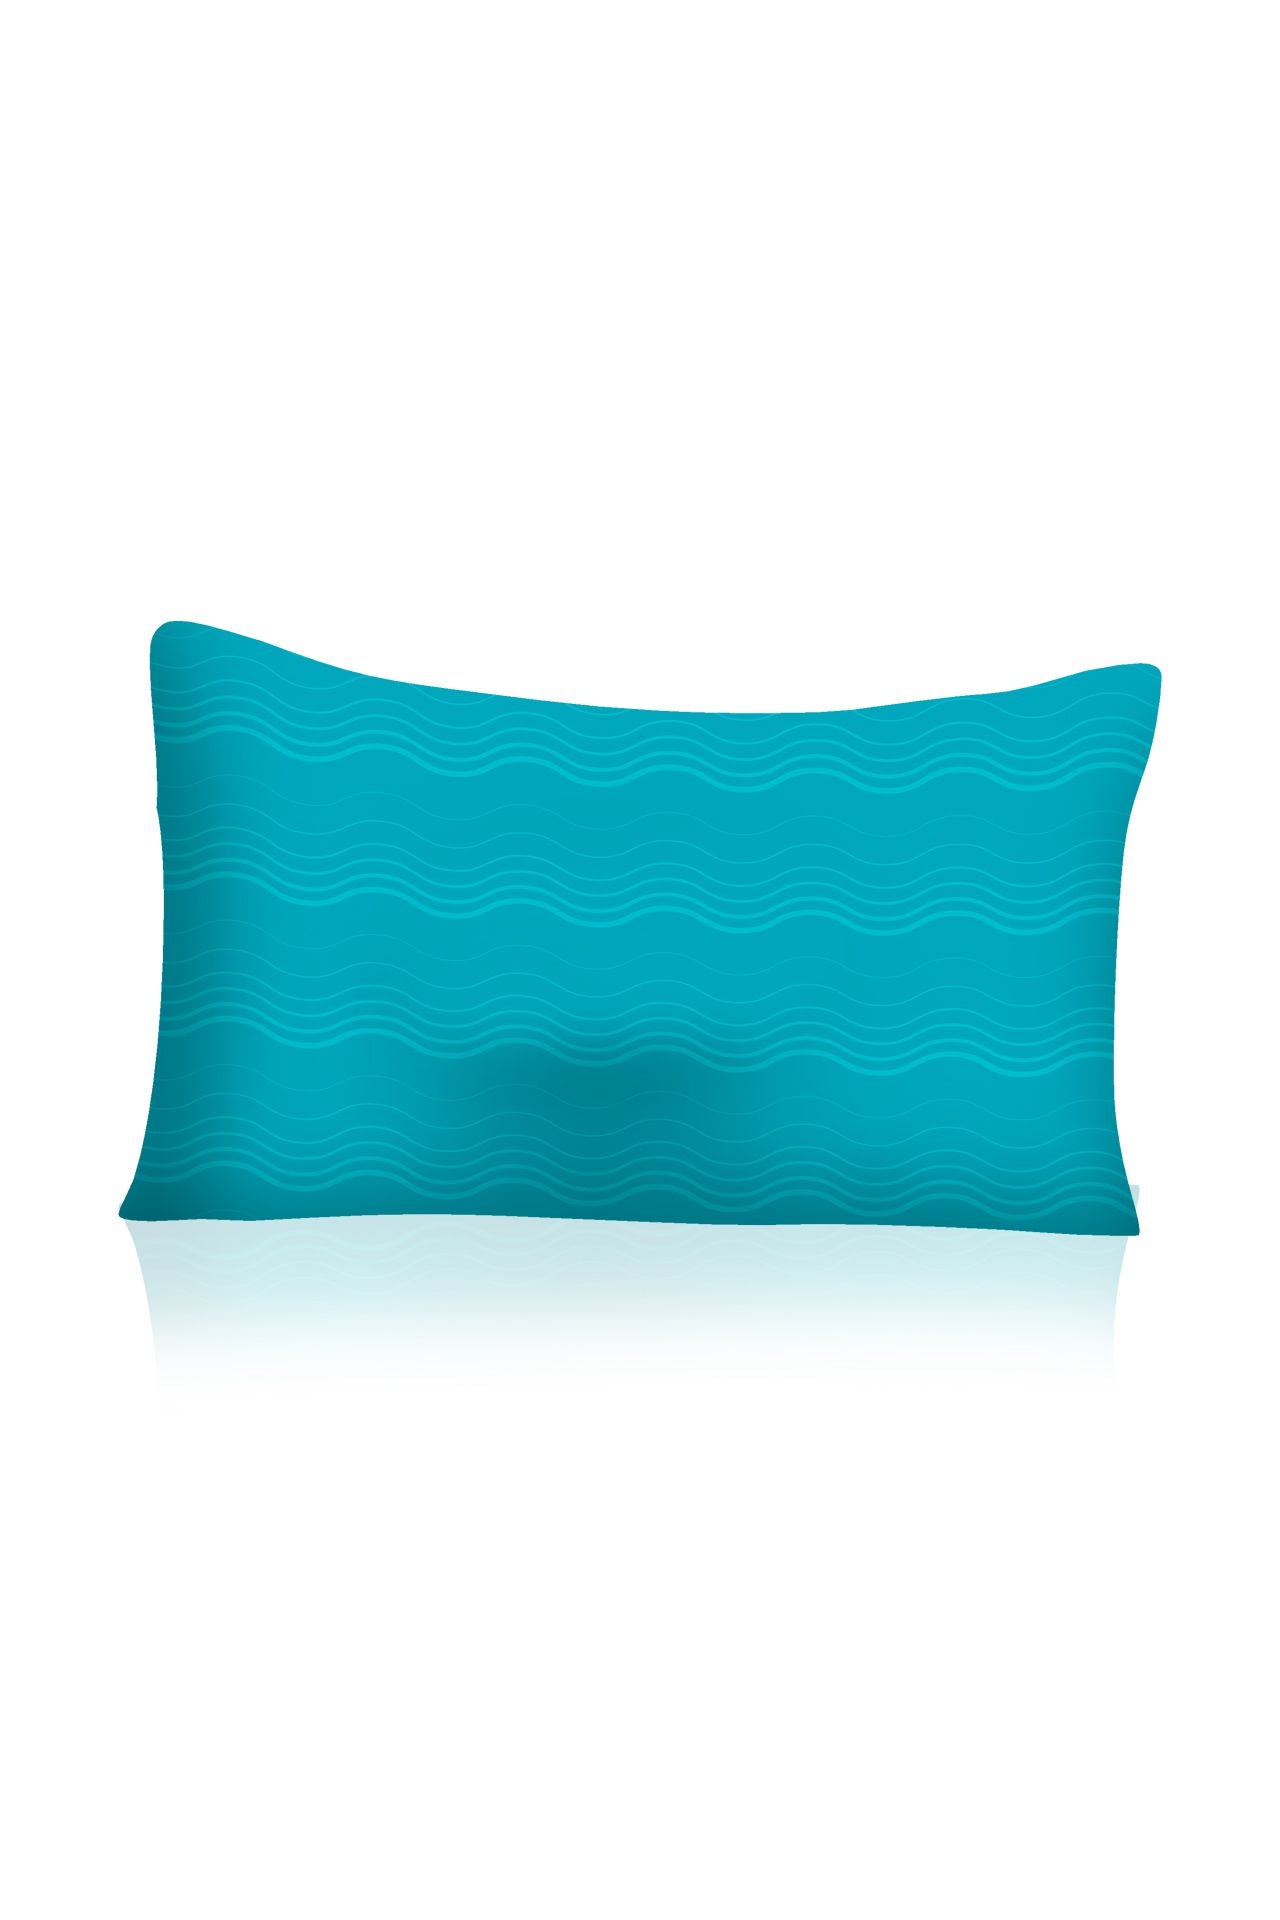 "blue pillow cases" "Kyle X Shahida" "designer decorative pillows" "pillows for beds decorative"